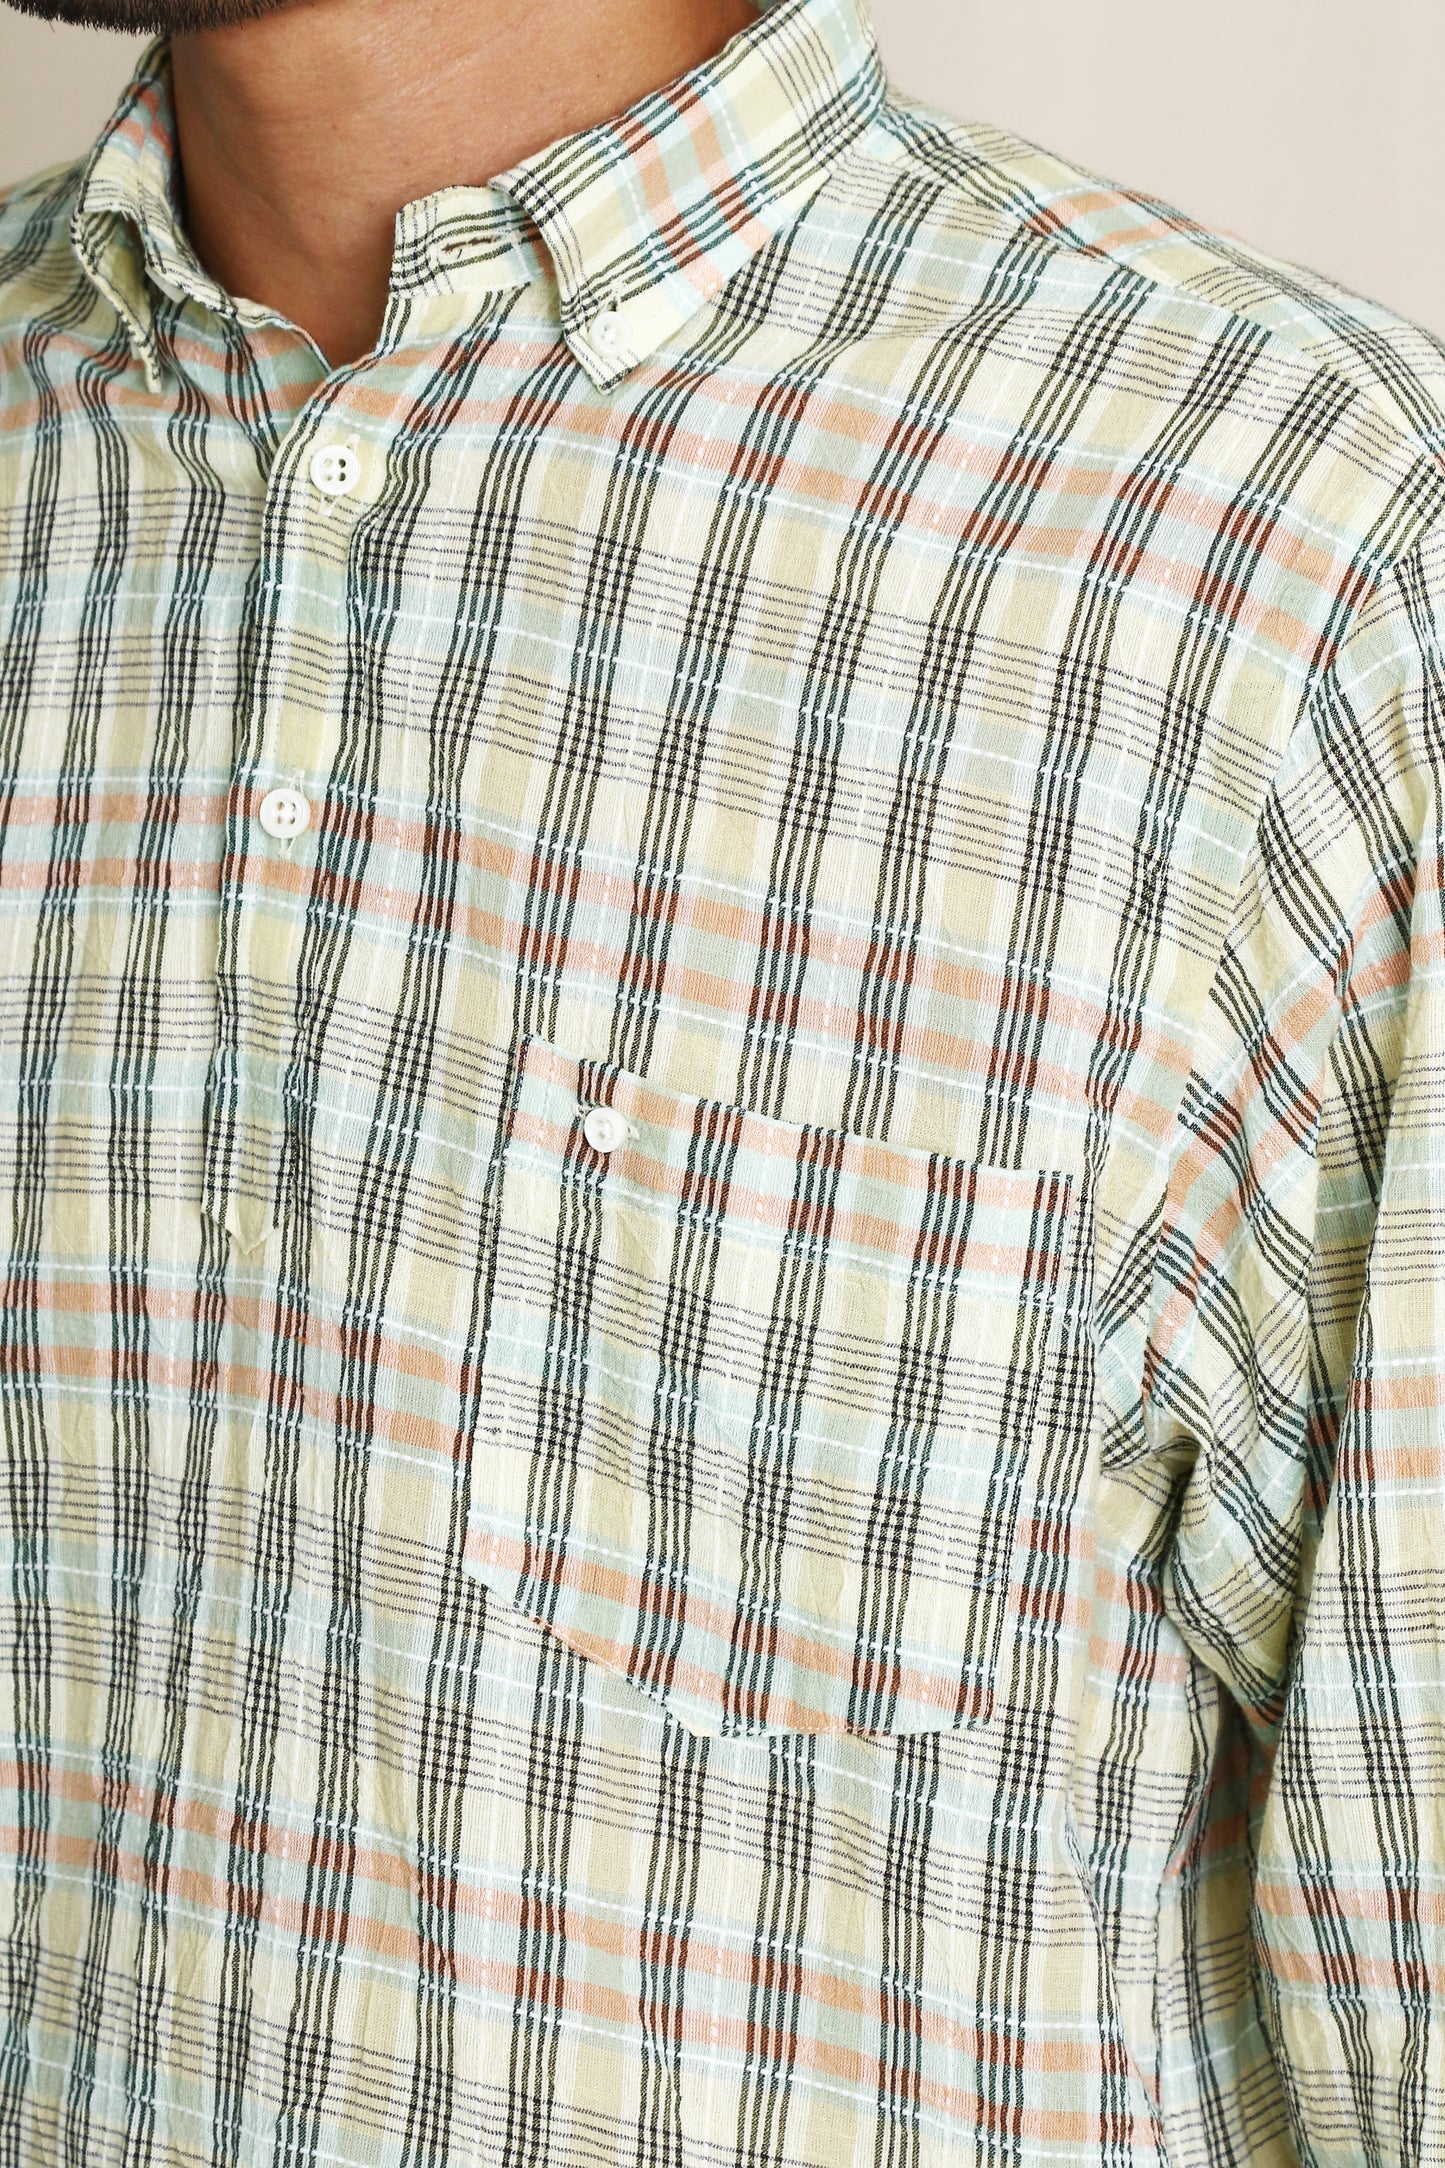 Slip-on shirt,New West Coast button down shirt